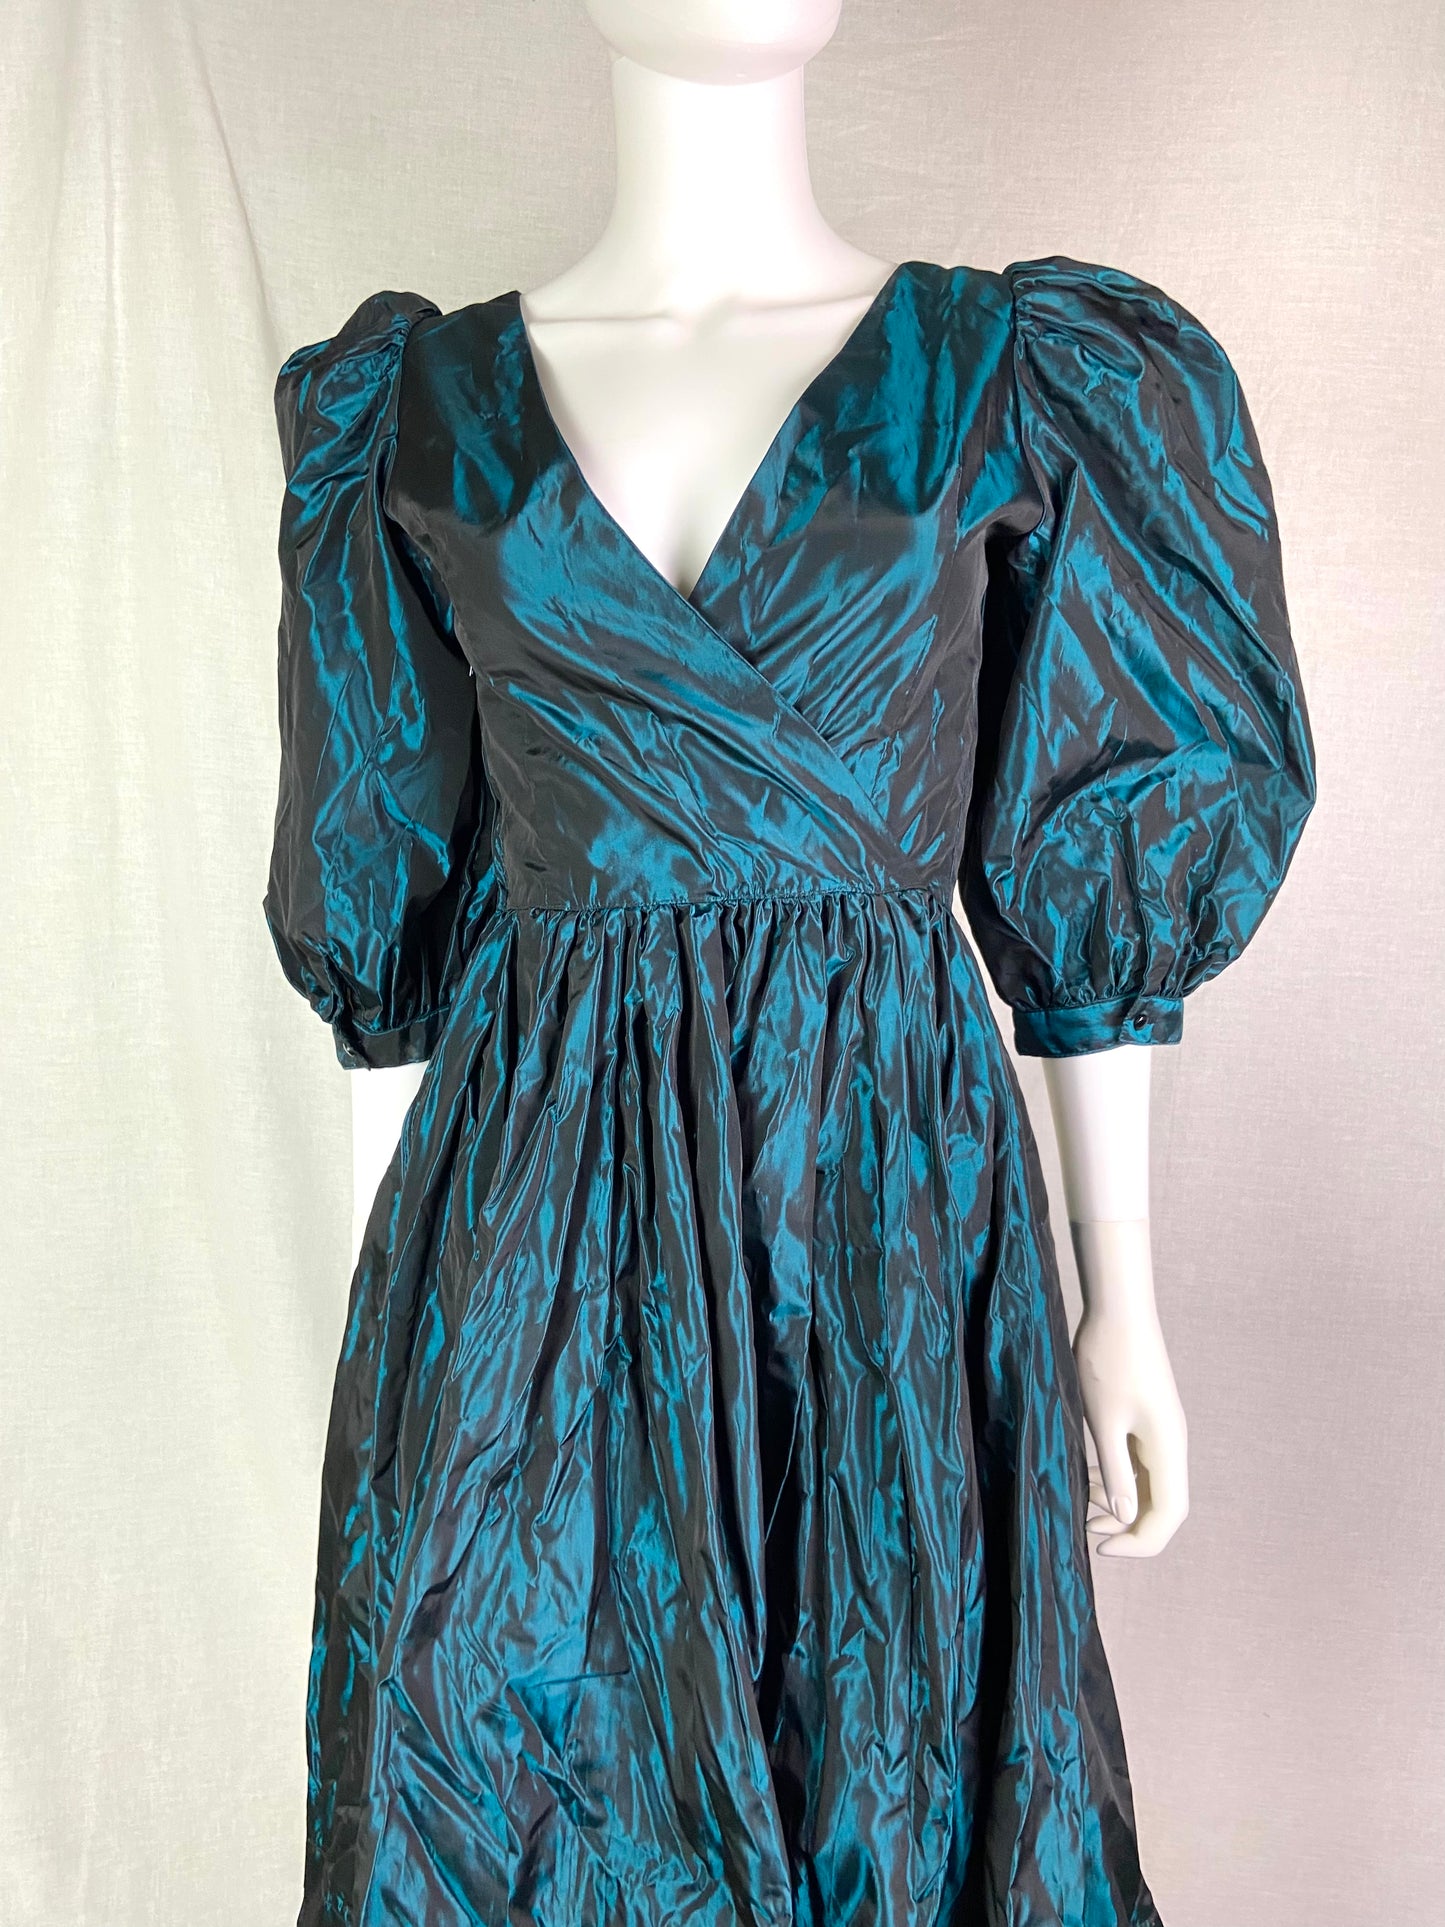 Vintage Laura Ashley Emerald Green Metallic Wrap Princess Gown Dress ABBY ESSIE STUDIOS